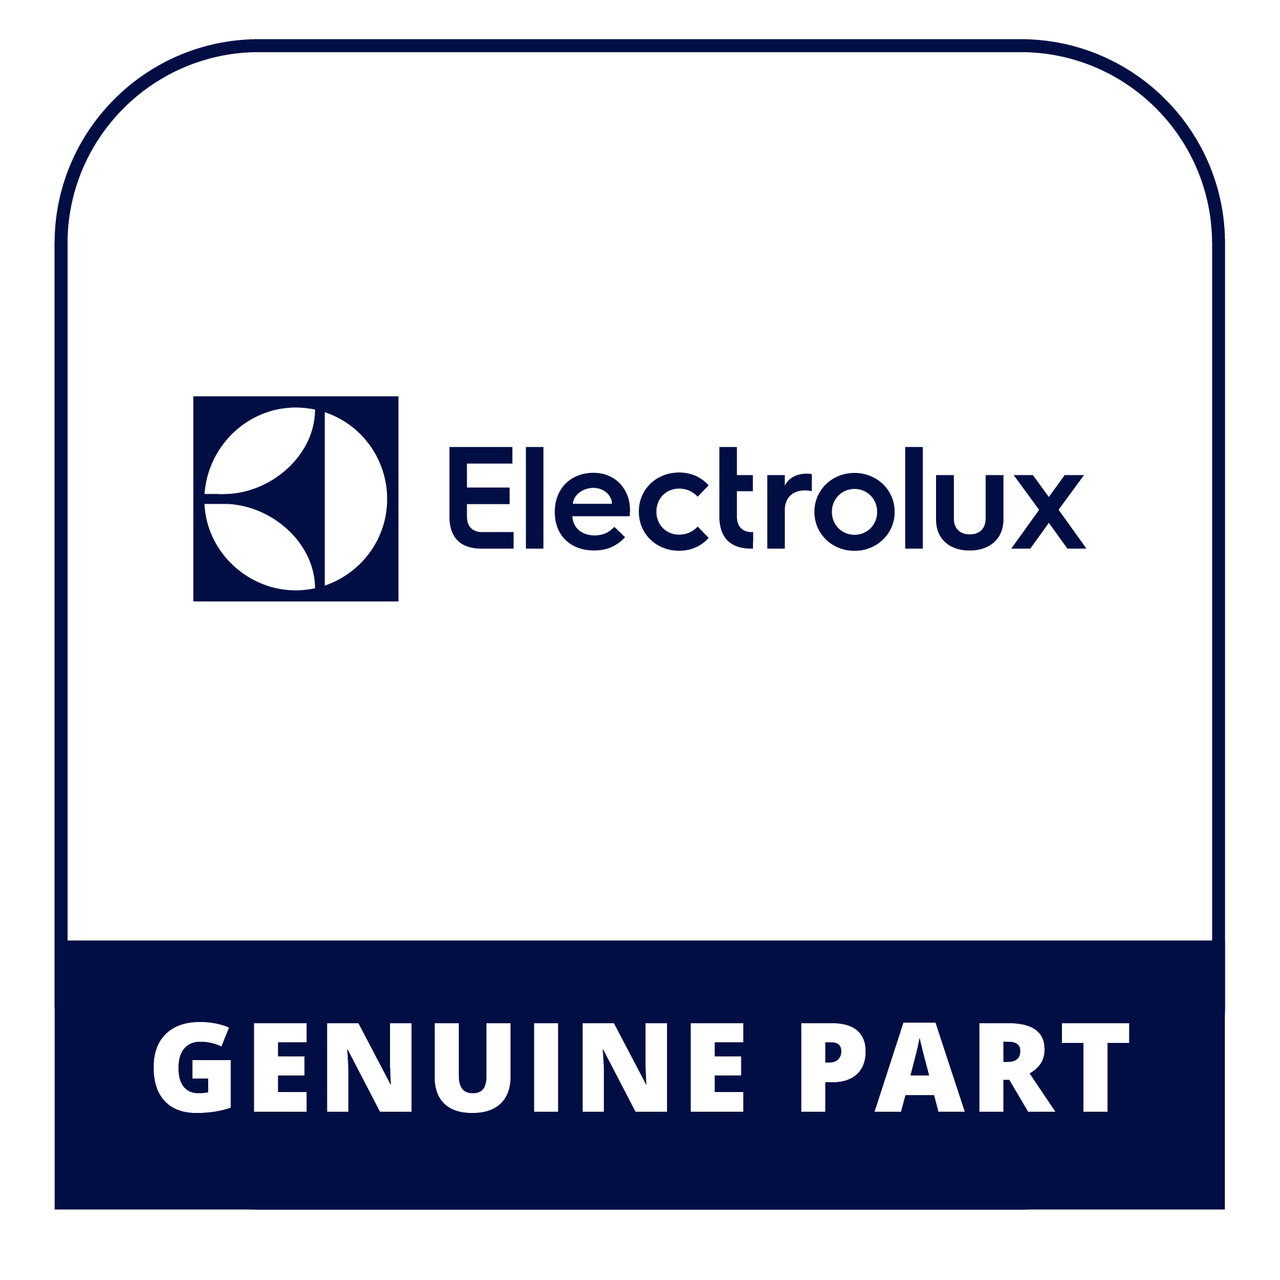 Frigidaire - Electrolux 216970802 - Bearing - Genuine Electrolux Part